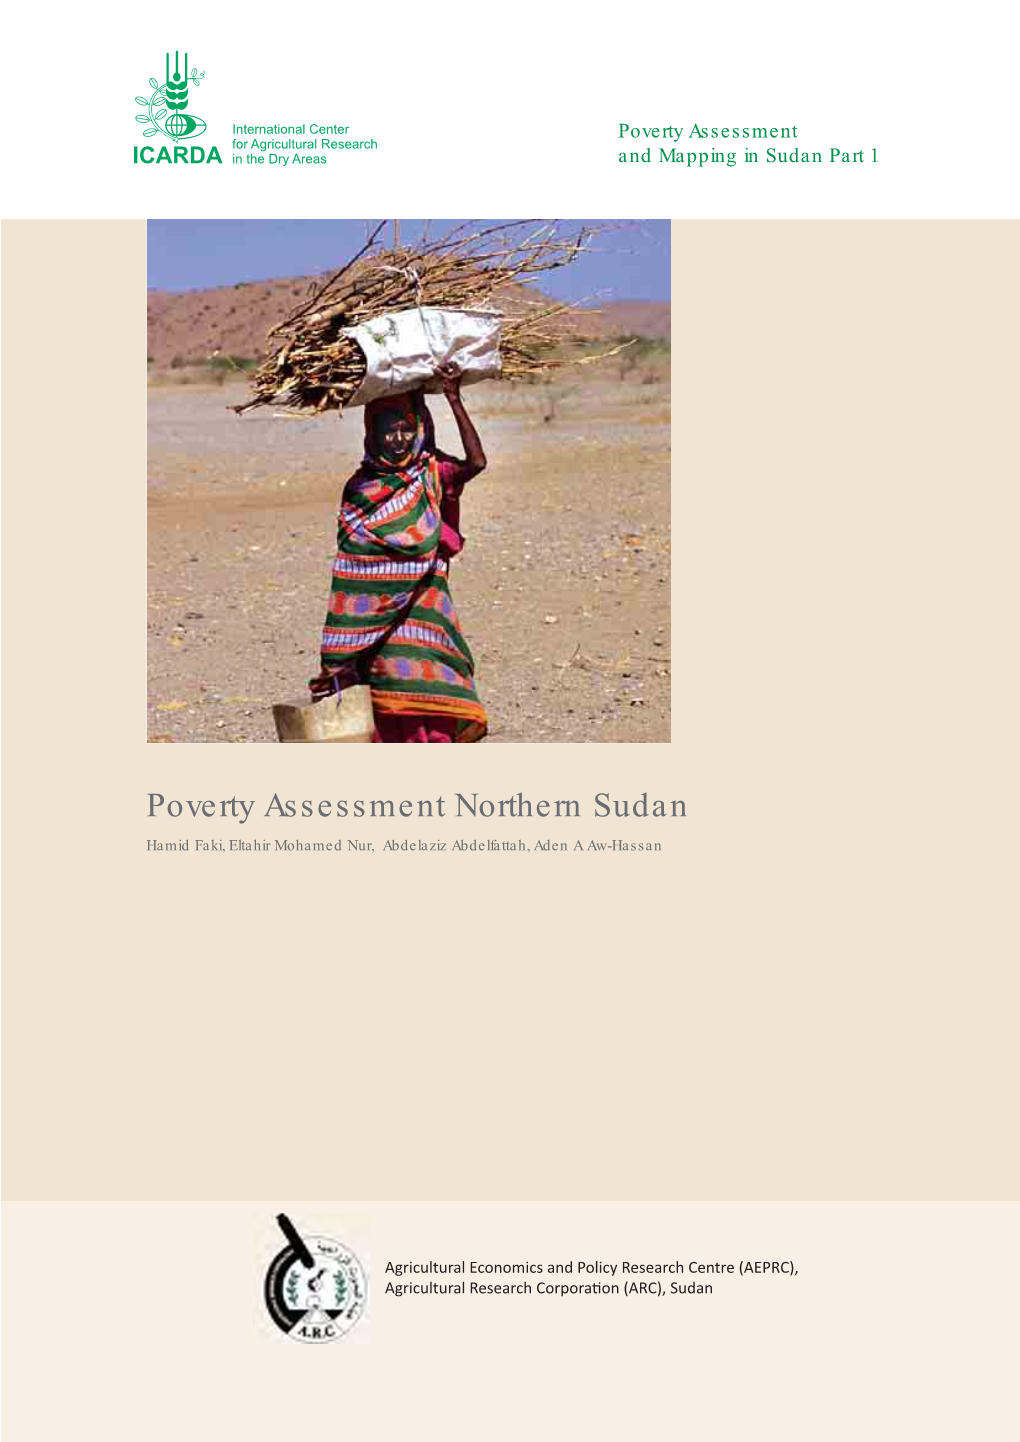 Poverty Assessment Northern Sudan Hamid Faki, Eltahir Mohamed Nur, Abdelaziz Abdelfattah, Aden a Aw-Hassan